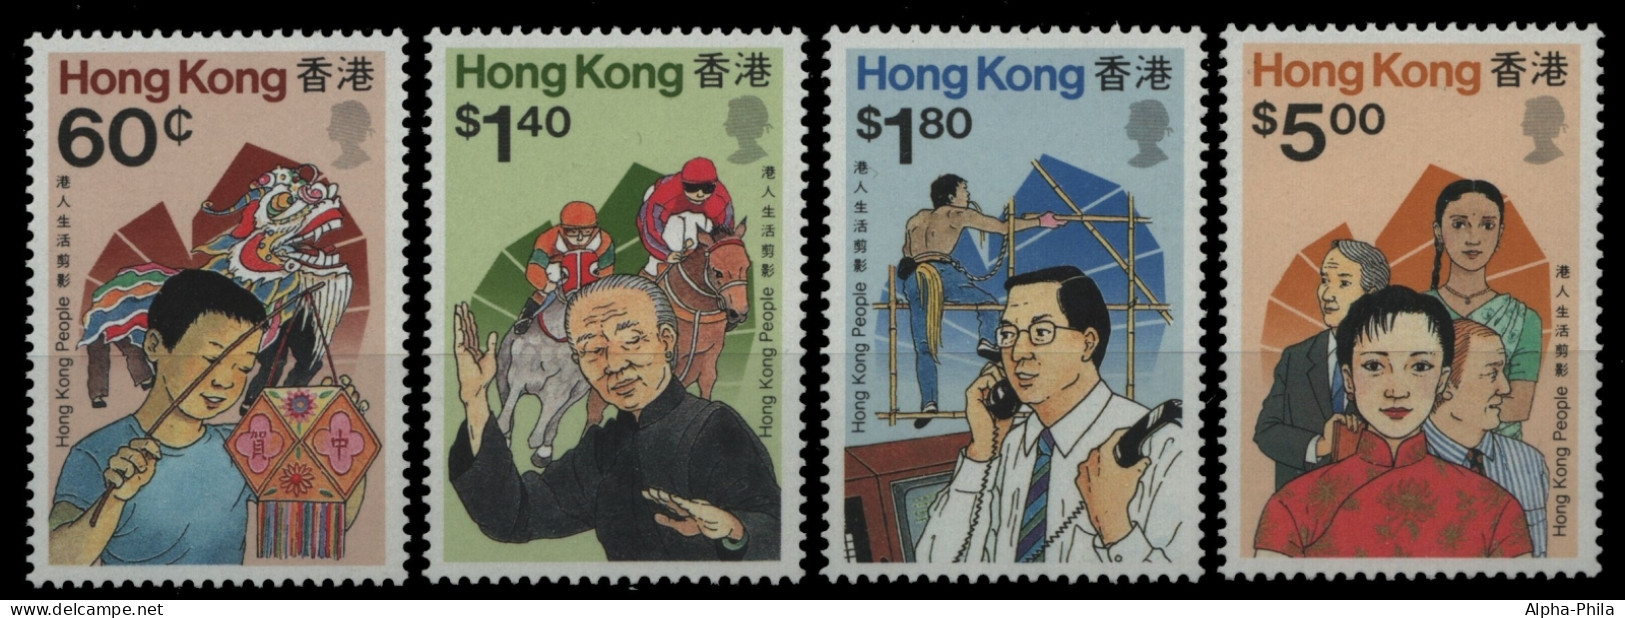 Hongkong 1989 - Mi-Nr. 567-570 ** - MNH - Leben In Hongkong - Nuovi